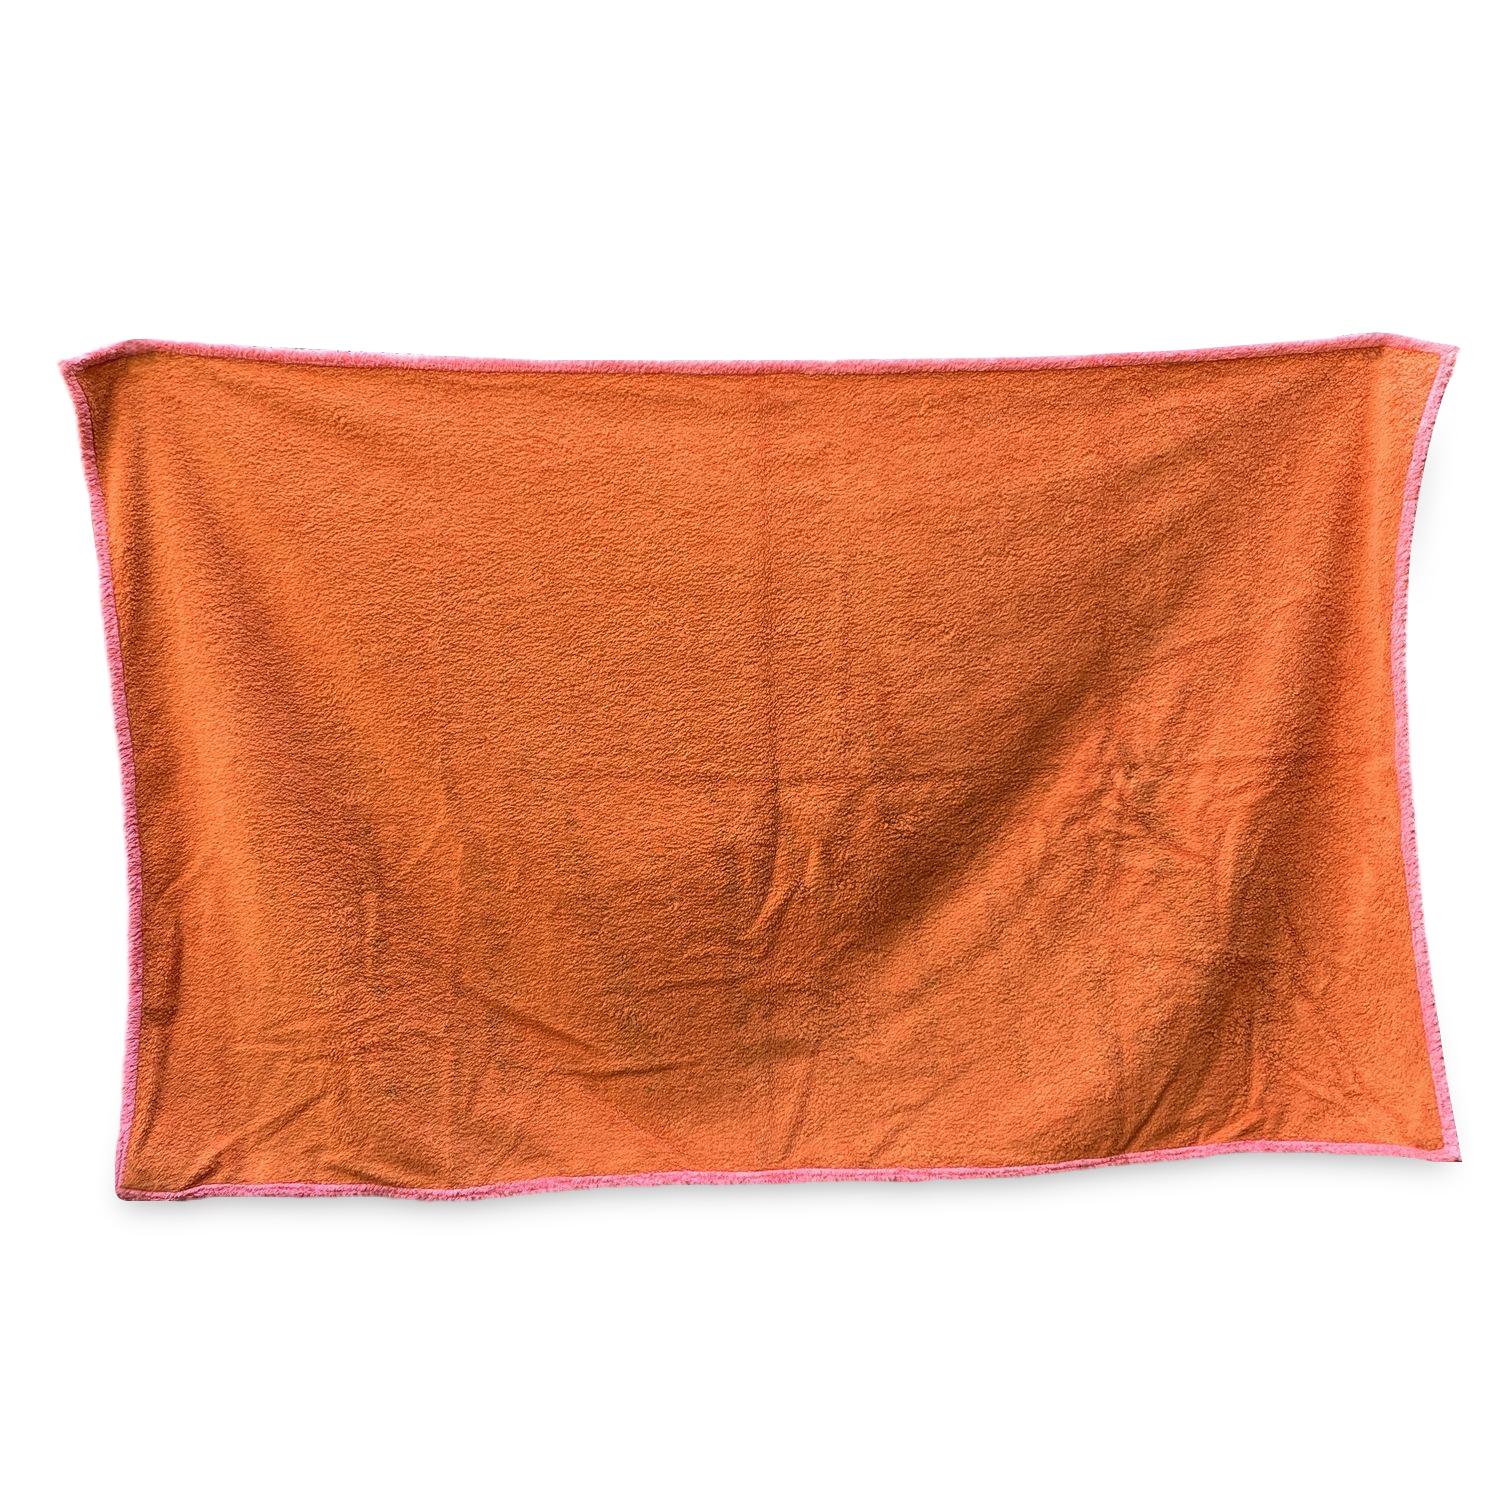 Vintage Hermes Terrycloth Cotton Large Beach Towel with Hyppo design. 100% cotton. Pink, grey and green colors. Plain orange back. Measurements: 36 x 59 inches - 91.5 x 149,86 cm.

Details

MATERIAL: Cotton

COLOR: Multicolour

MODEL: -

GENDER: